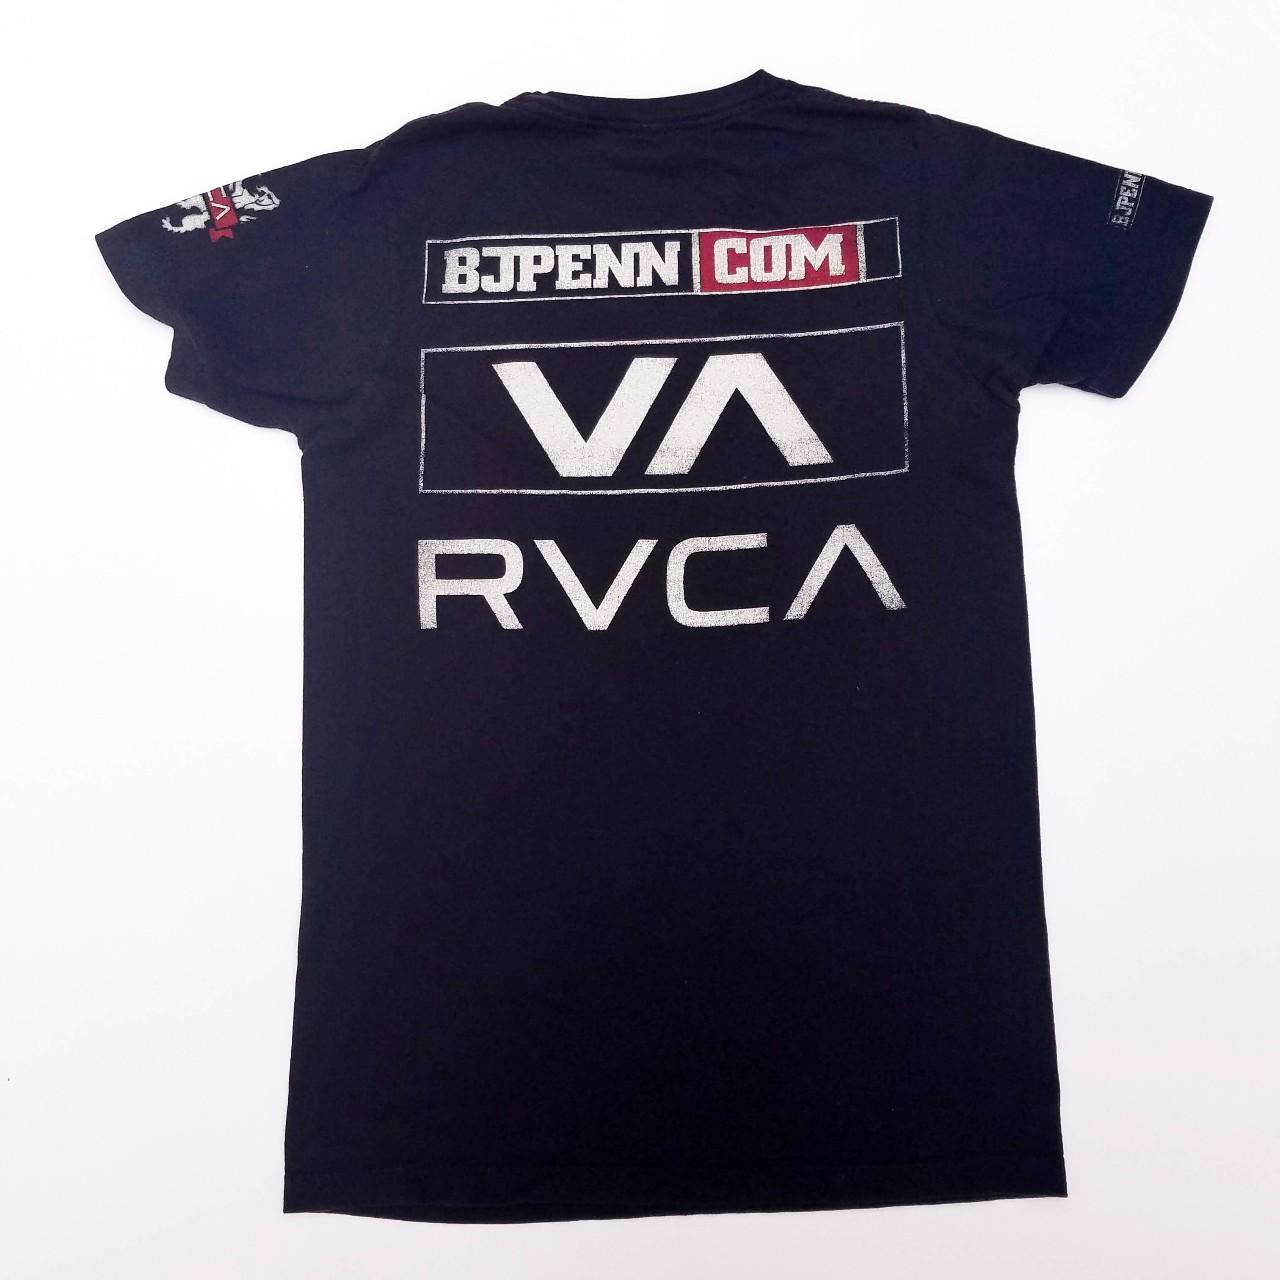 UFC Store Ufc Hawaii Charity Shirt - teejeep